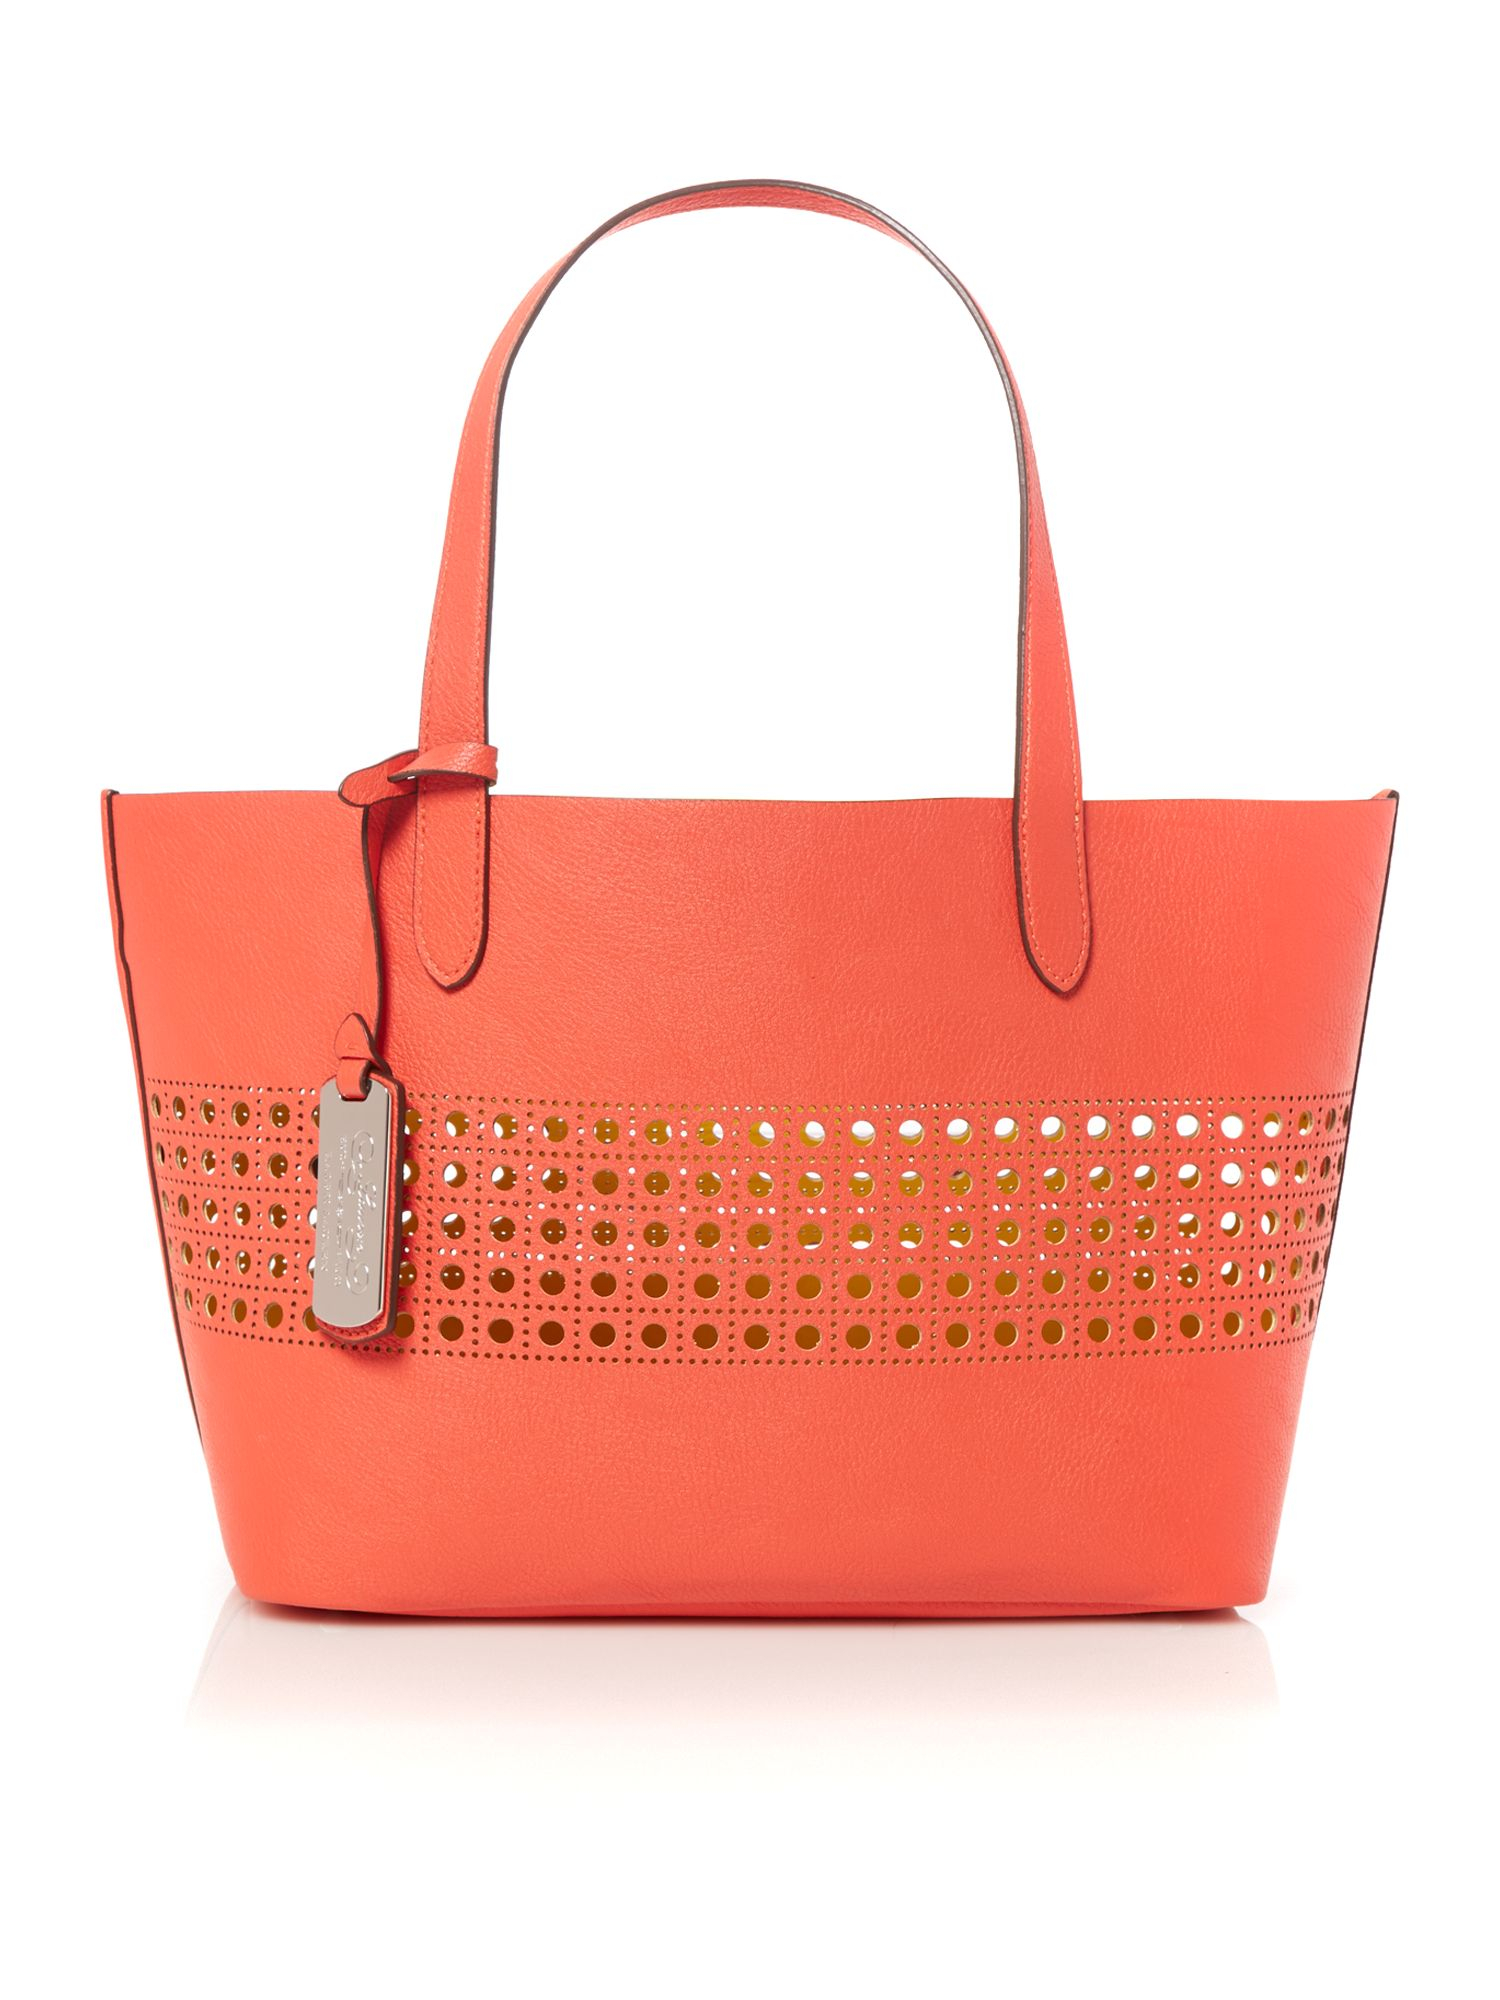 Lauren By Ralph Lauren Leighton Coral Small Tote Bag in Orange | Lyst